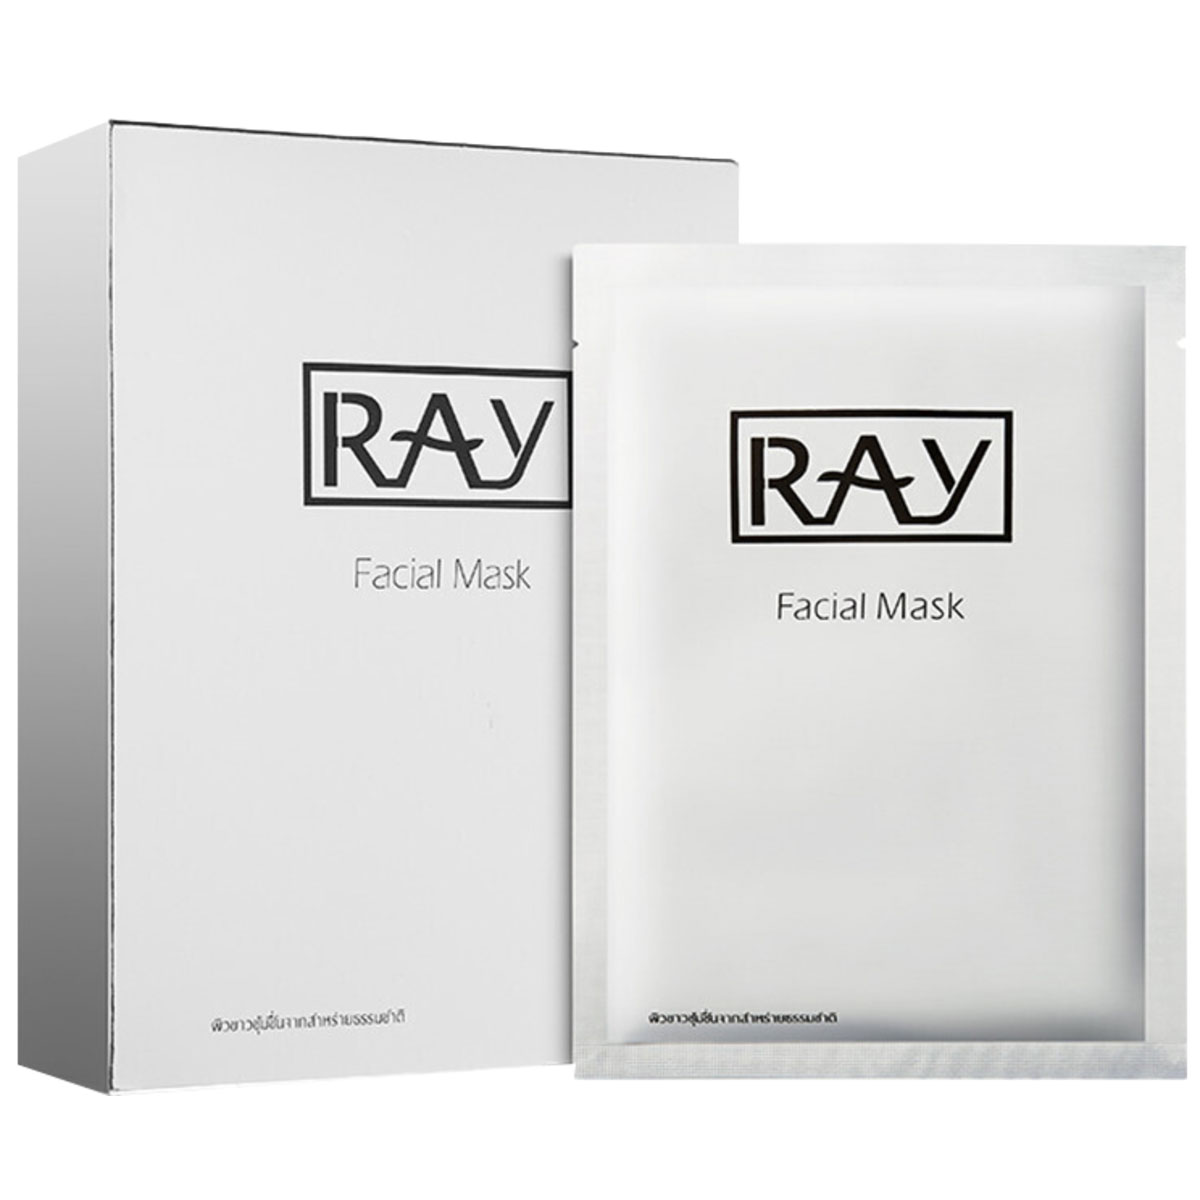 RAY Silver Facial Mask